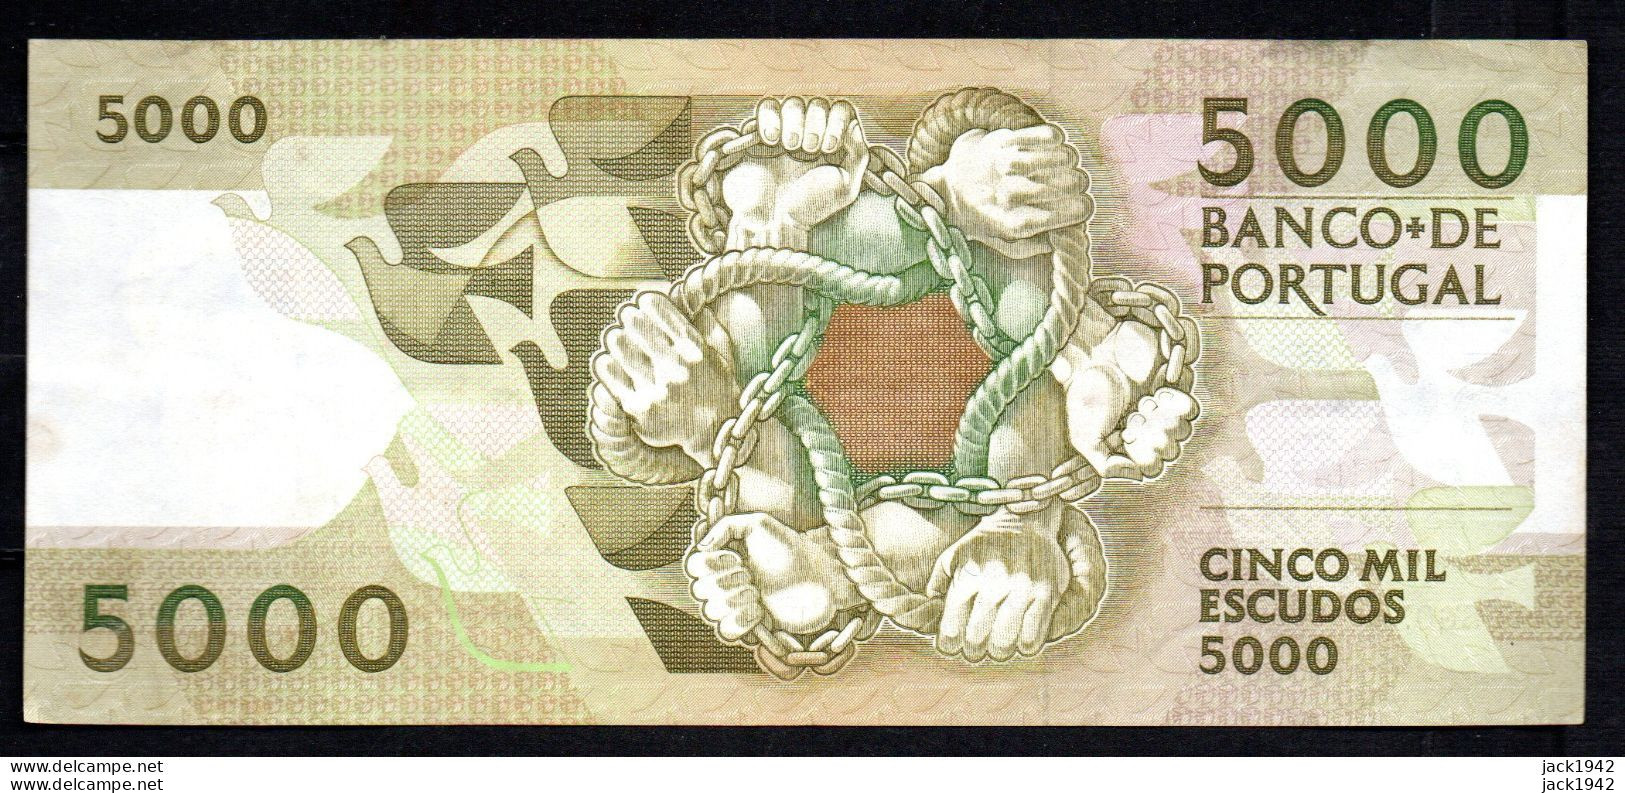 5000 Escudos Note - Billet De 5000 Escudos Octobre 1991 - TTB Very Fine Condition - Portogallo